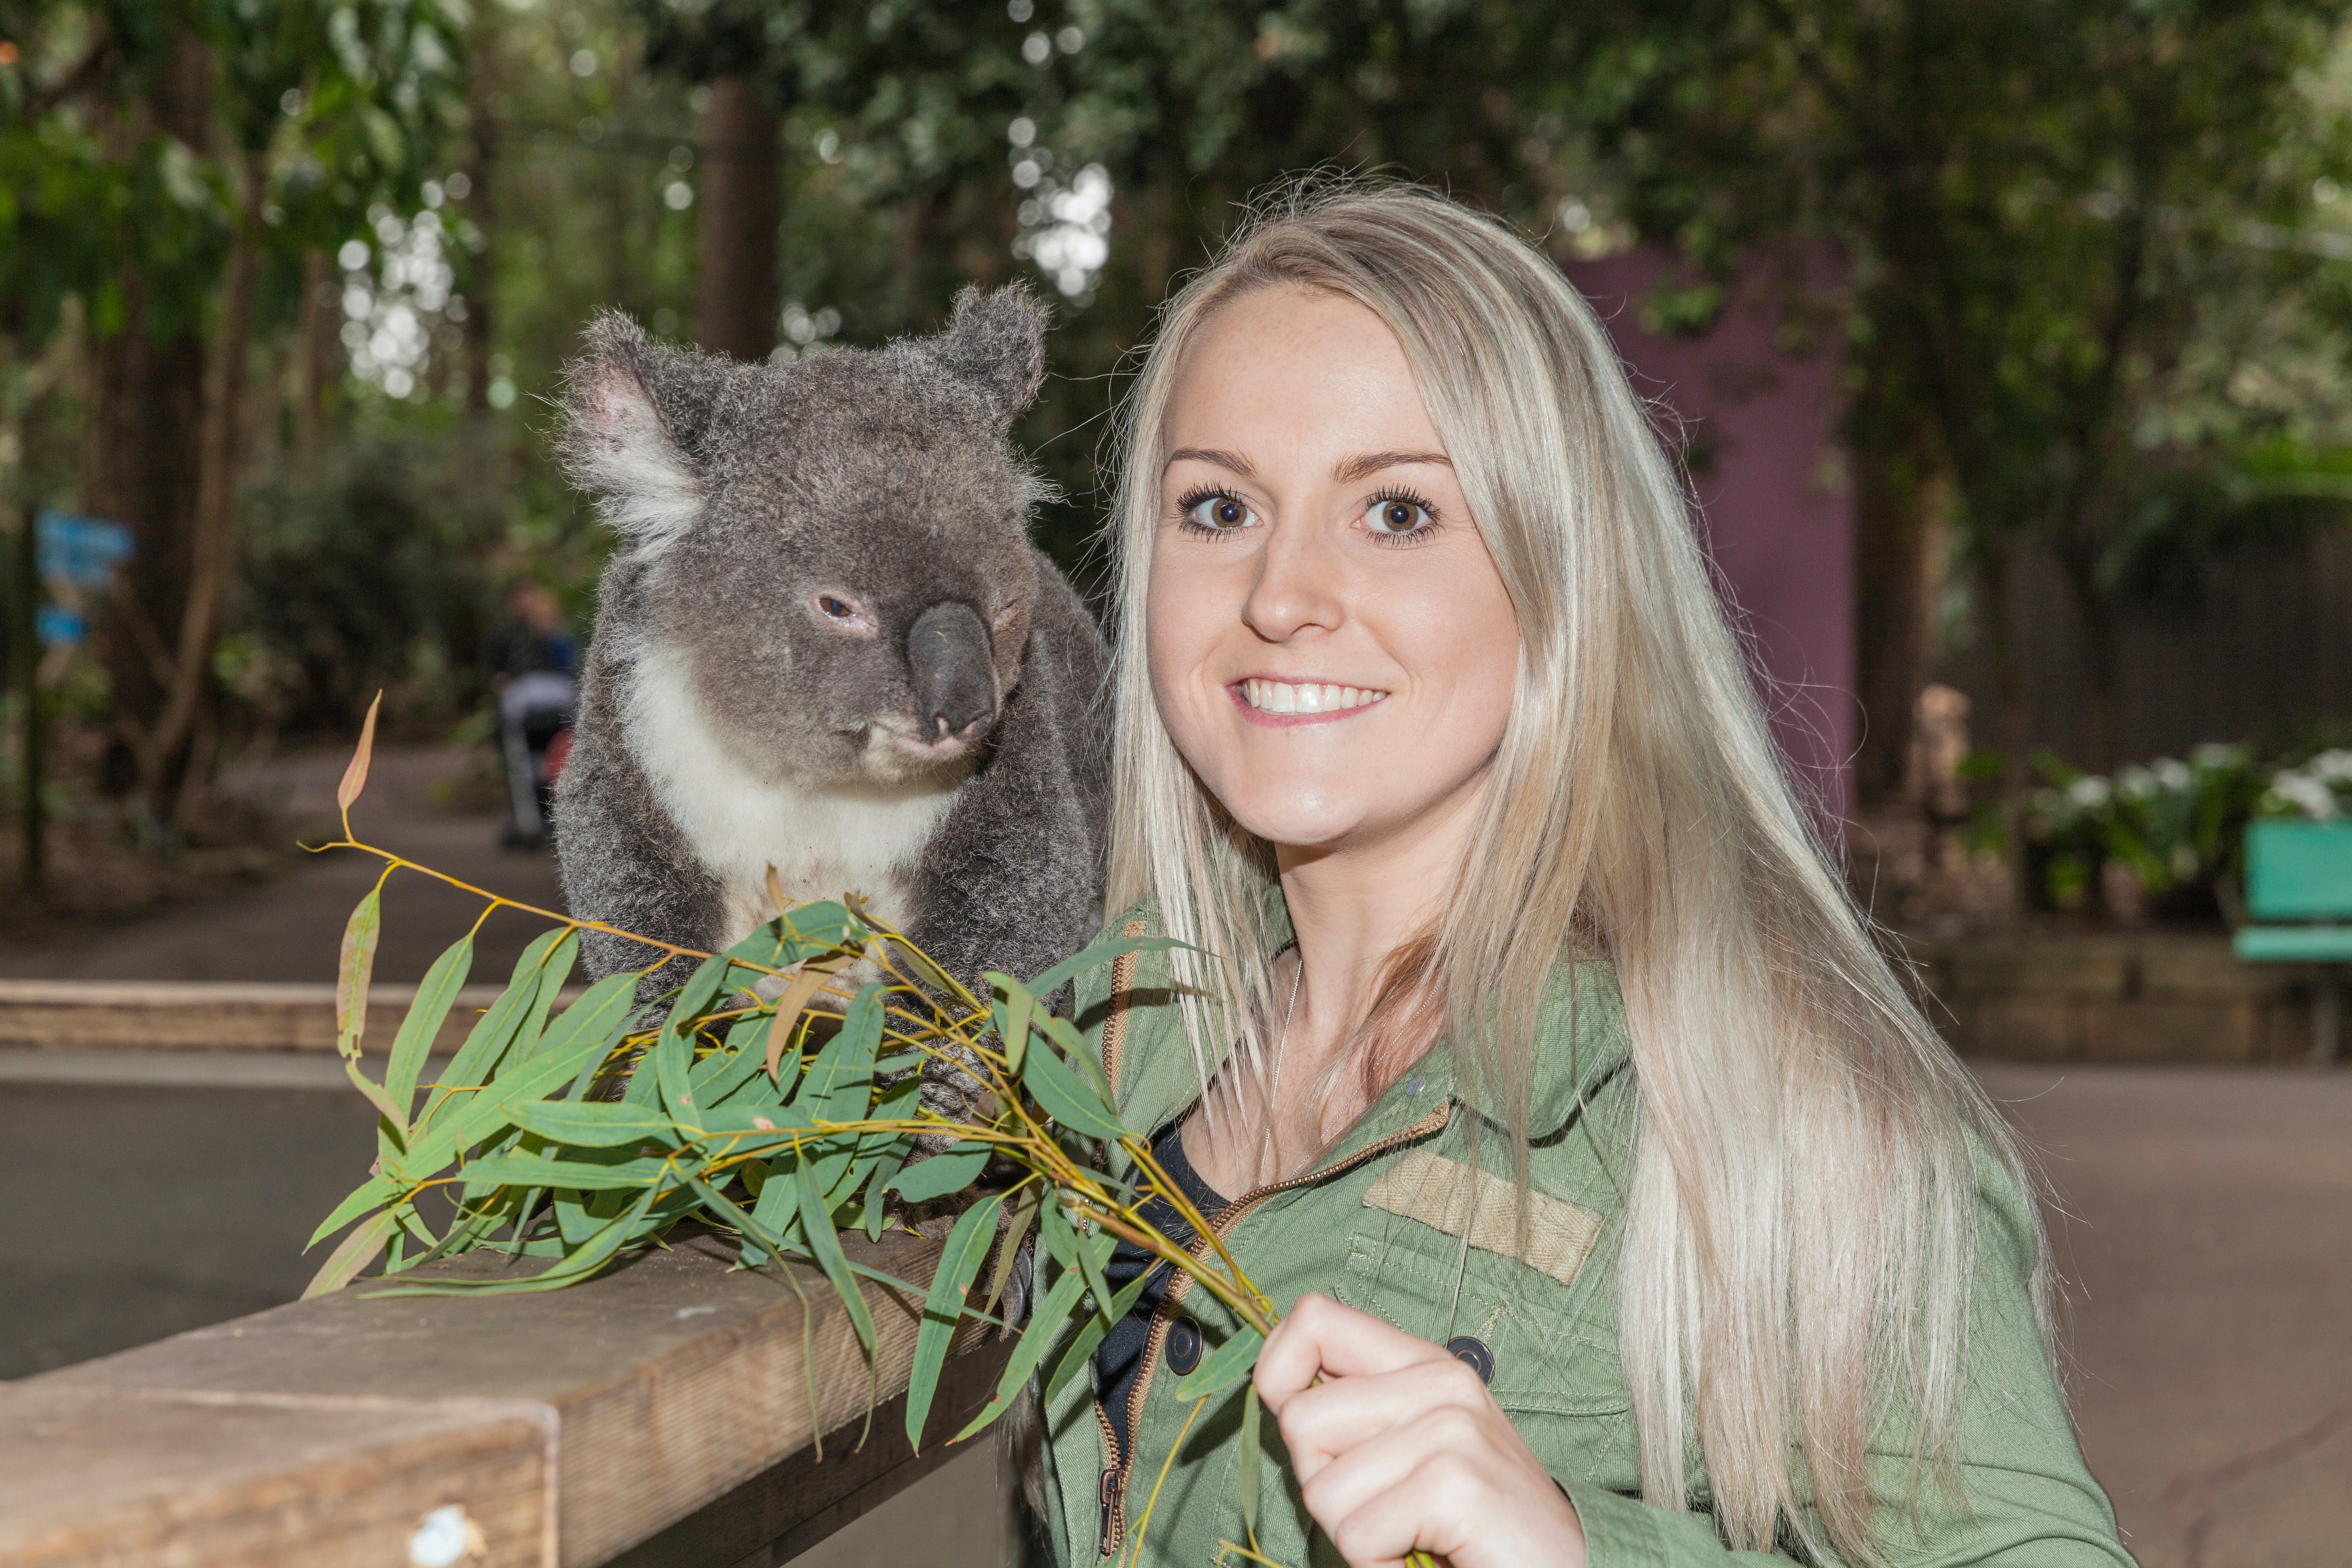 Koala Park Sanctuary - Accommodation Kalgoorlie